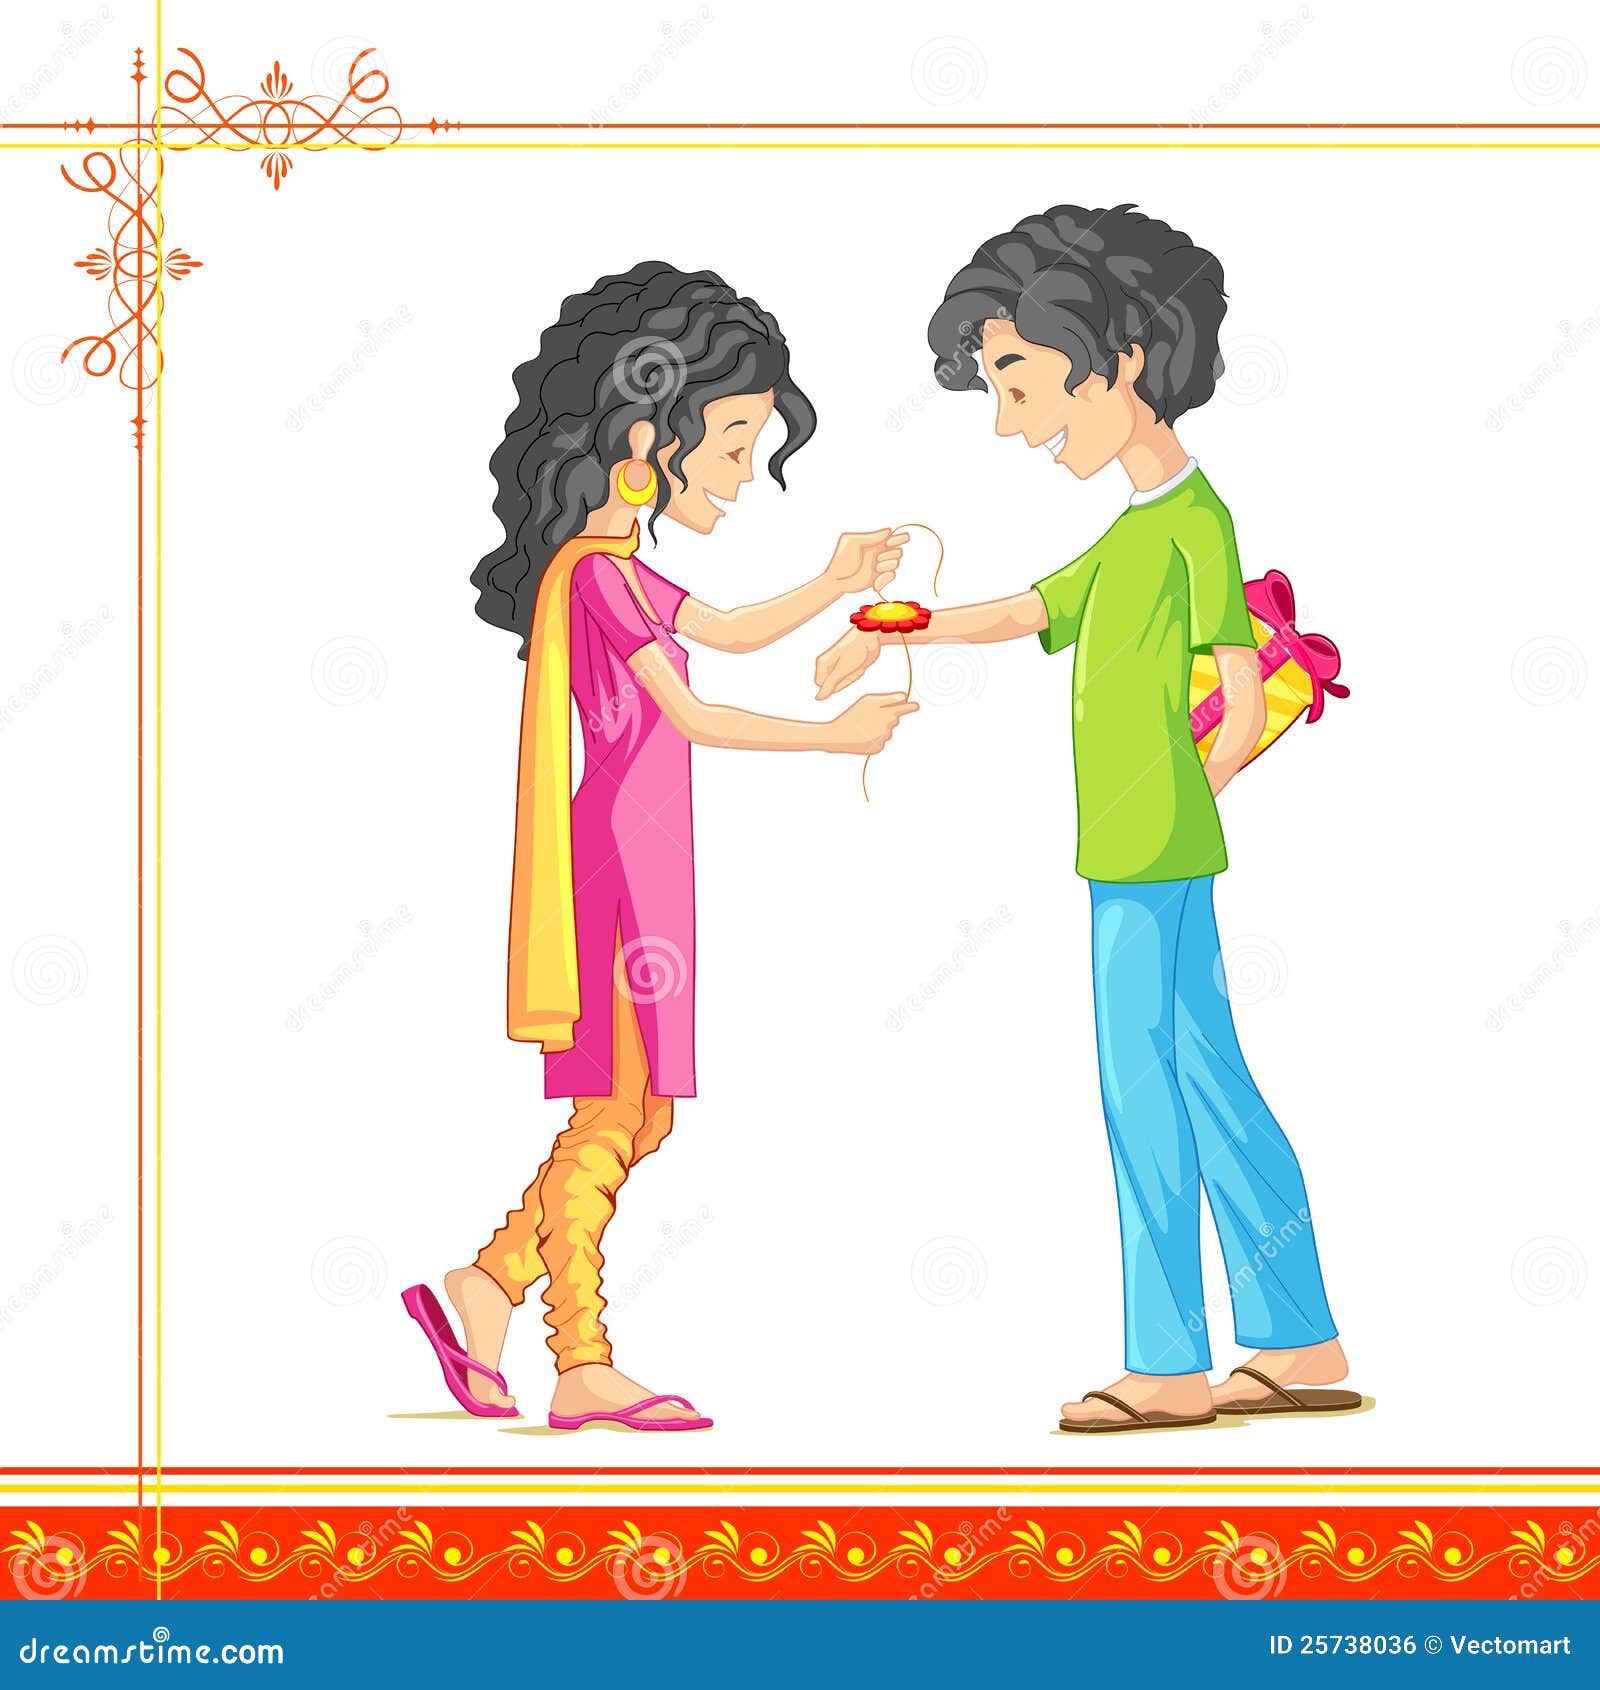 DIY Raksha Bandhan Cards | Love Laugh Mirch